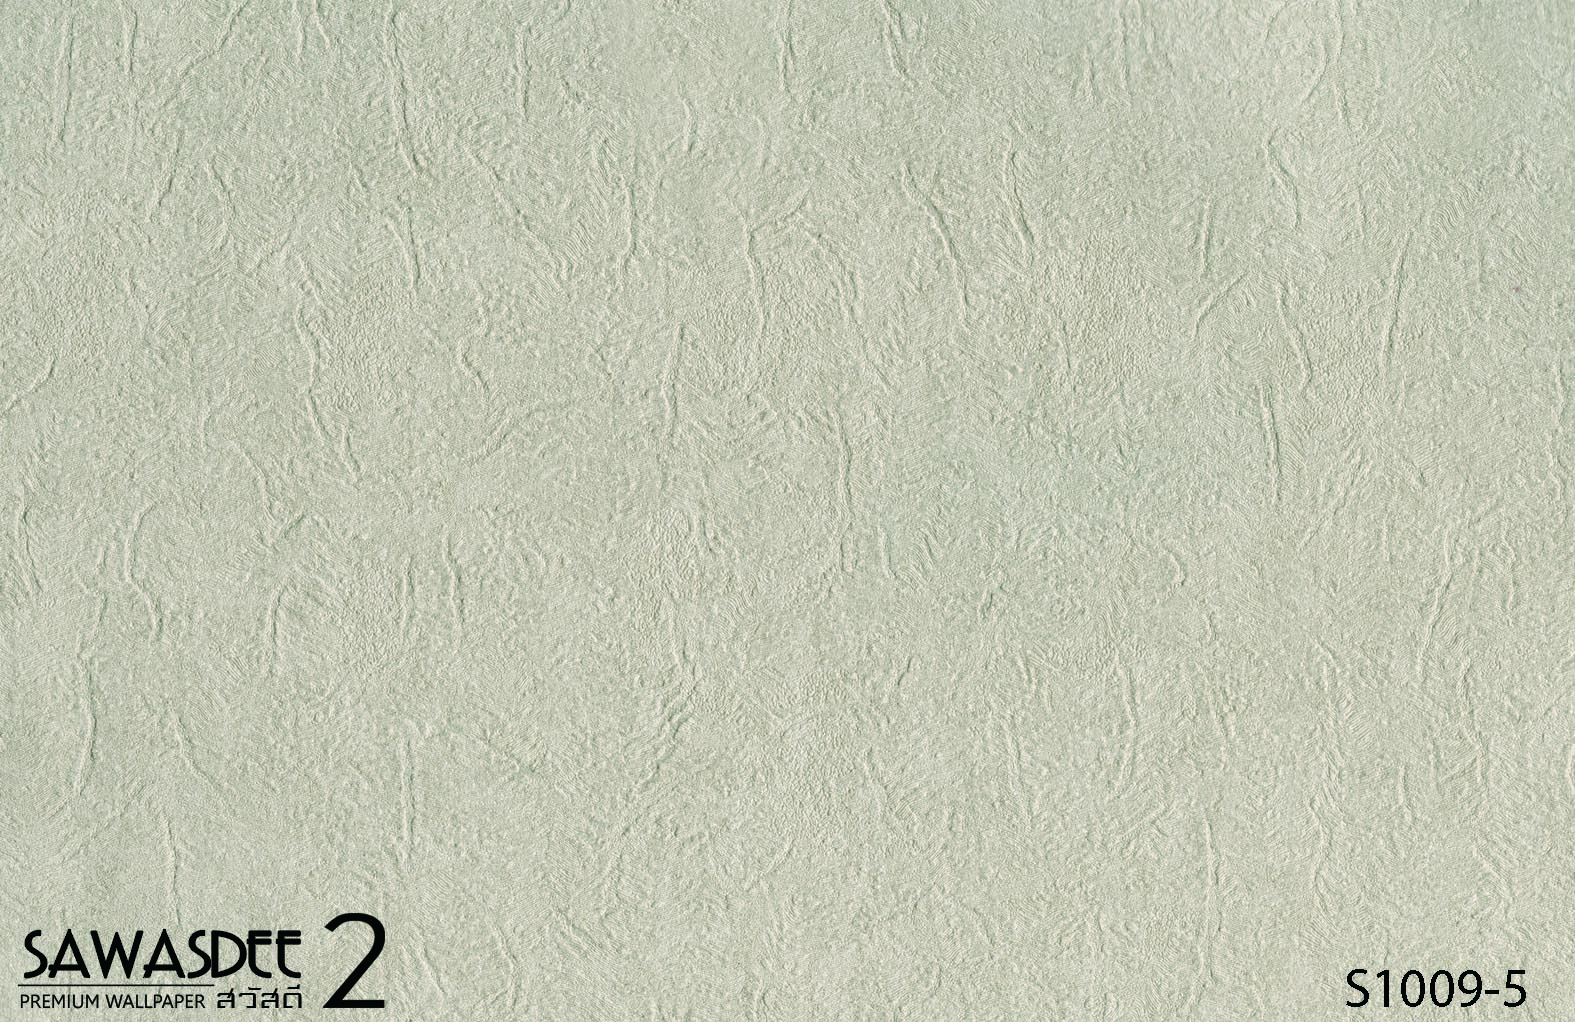 Wallpaper (SAWASDEE 2) S1009-5